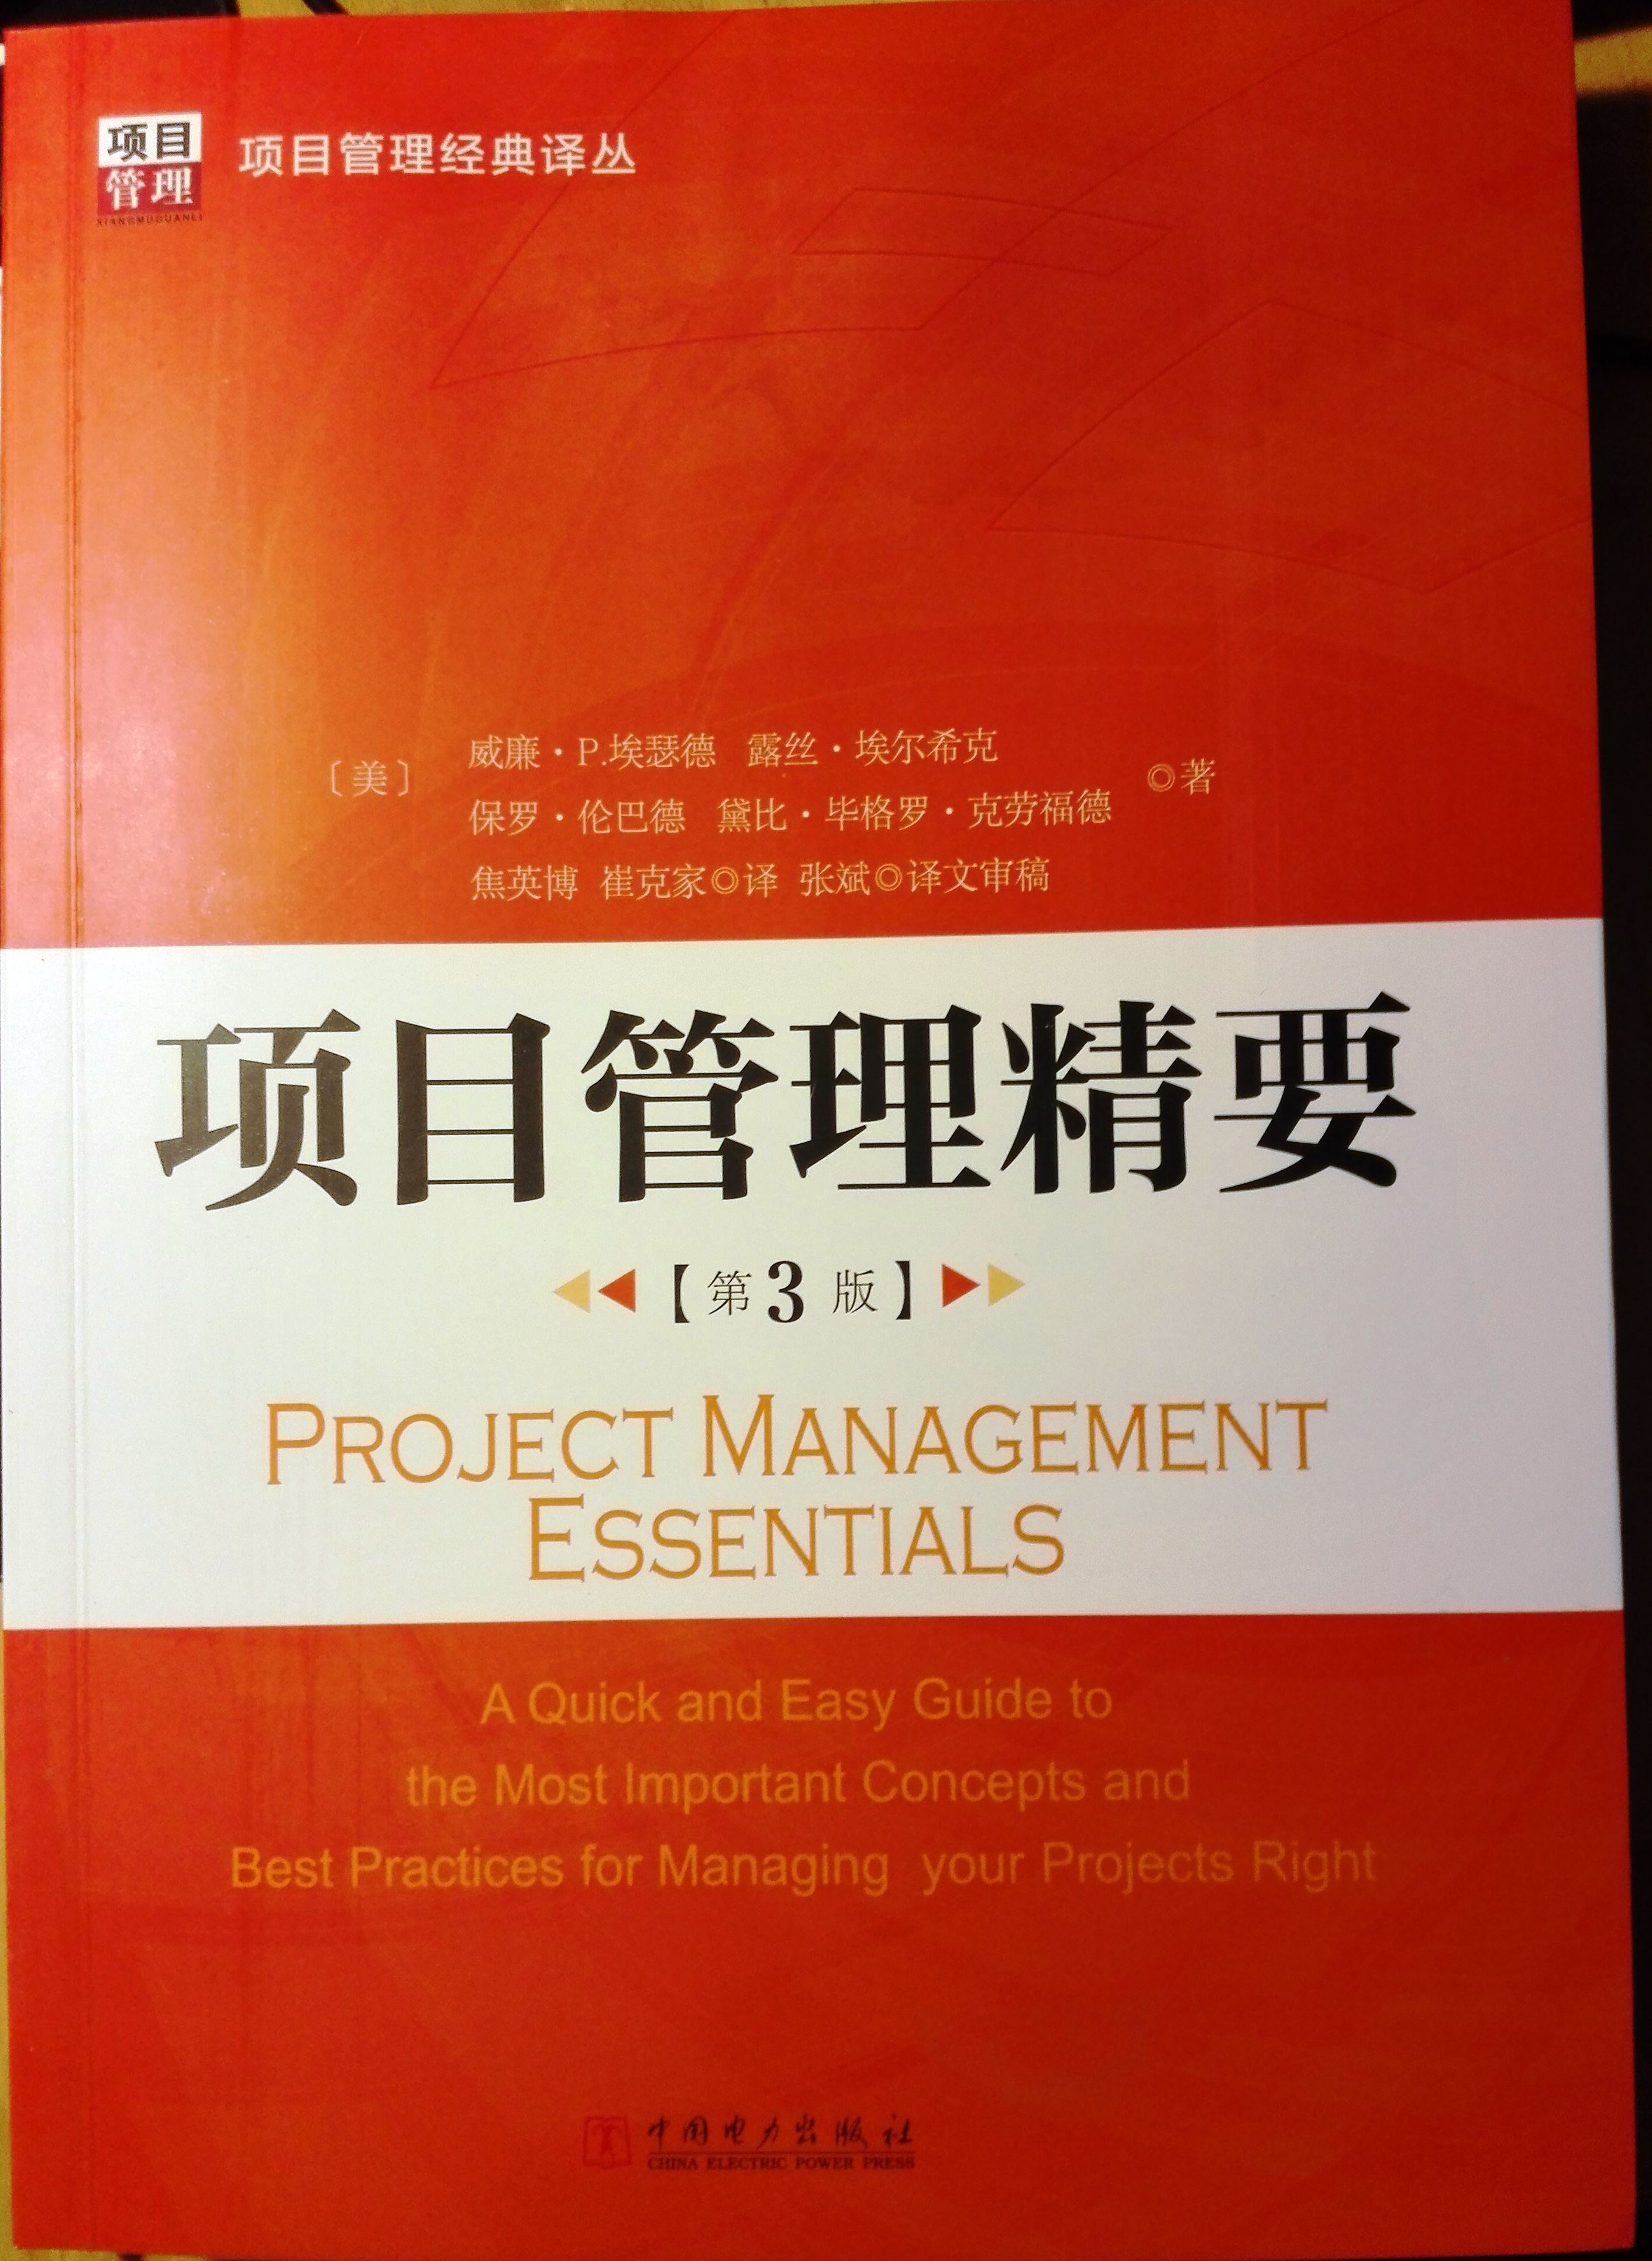 Project Management Essentials, Third Edition - Chinese Mandarin Translation